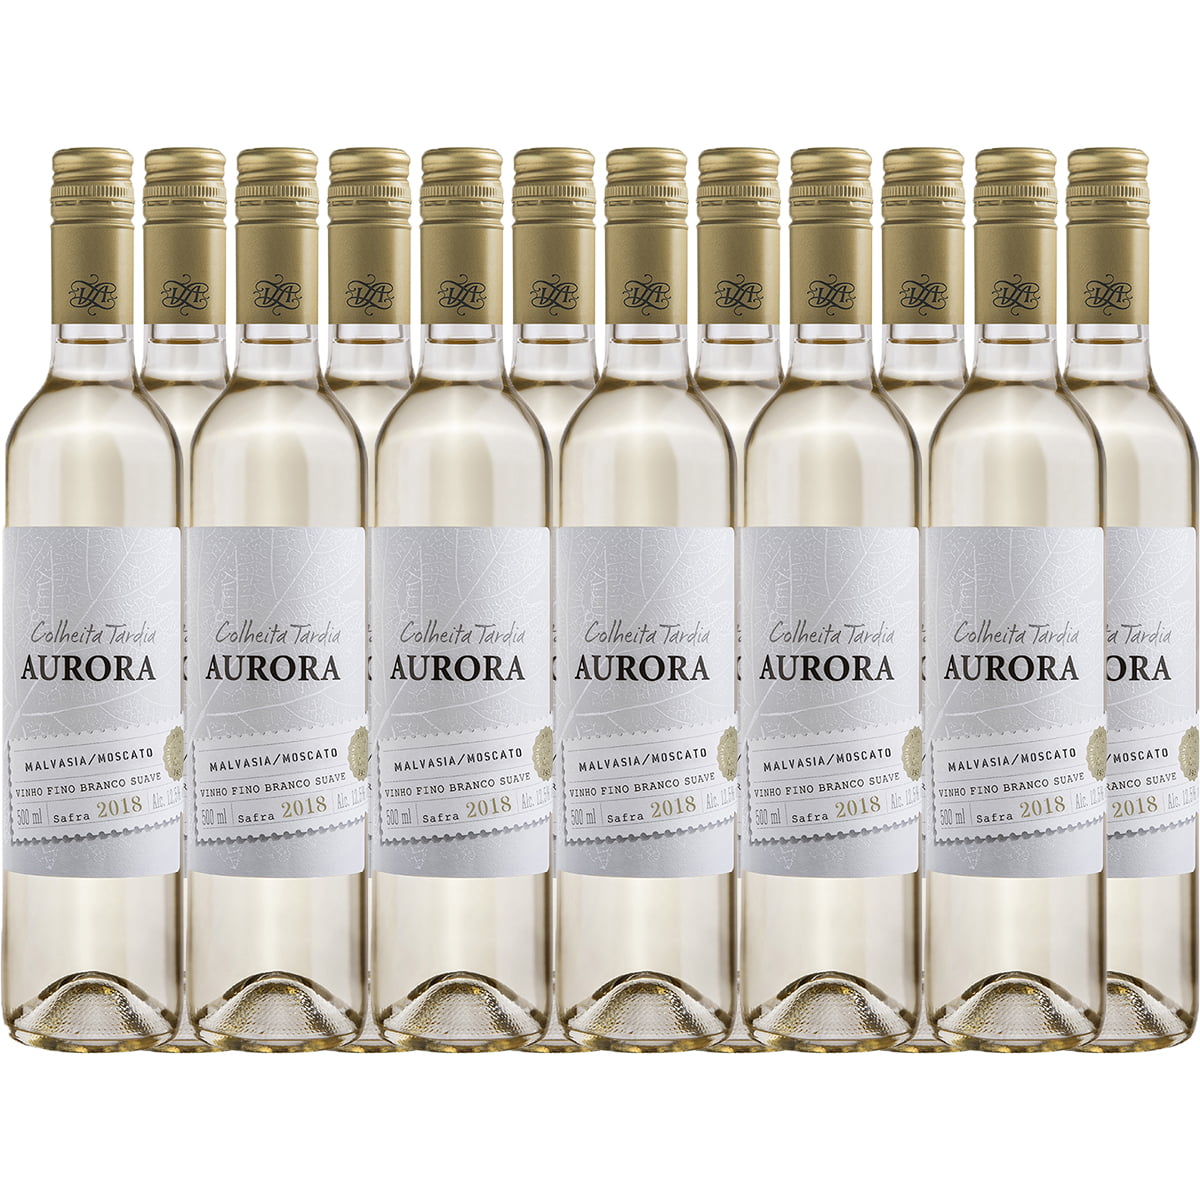 Vinho Aurora Colheita Tardia Malvasia/Moscato Branco Suave 500ml Combo C/12